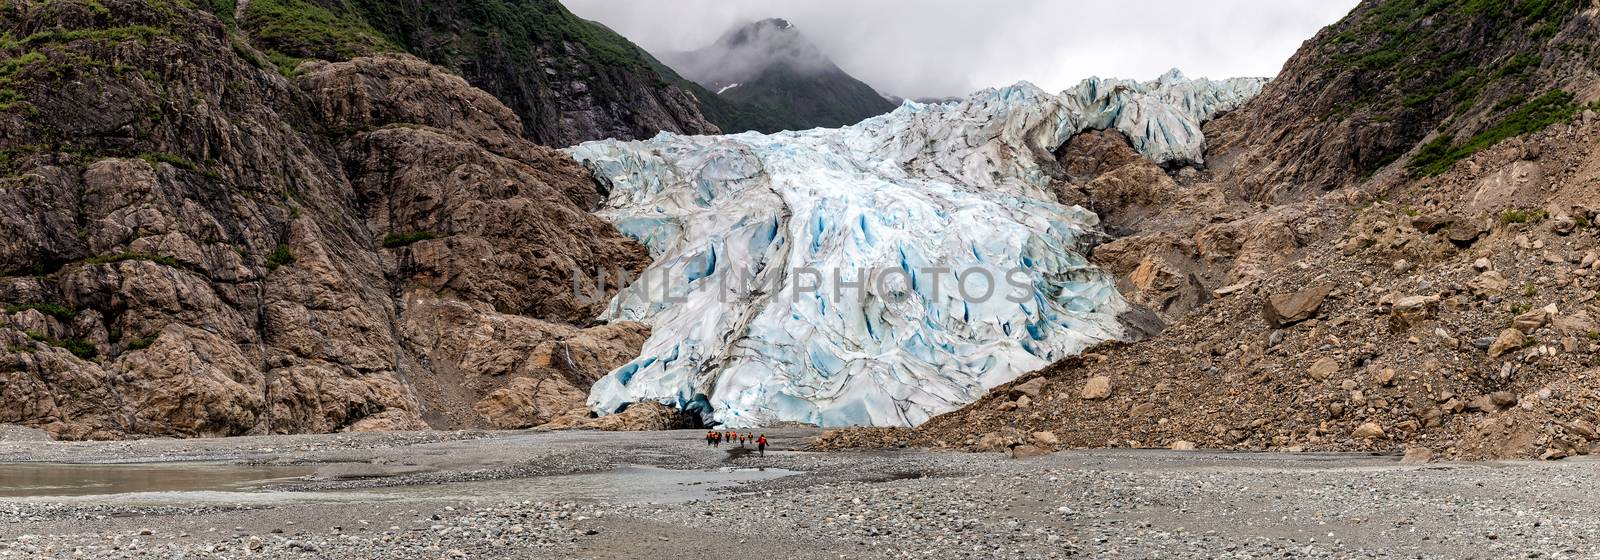 Panorama of Davidson Glacier in Alaska by DamantisZ